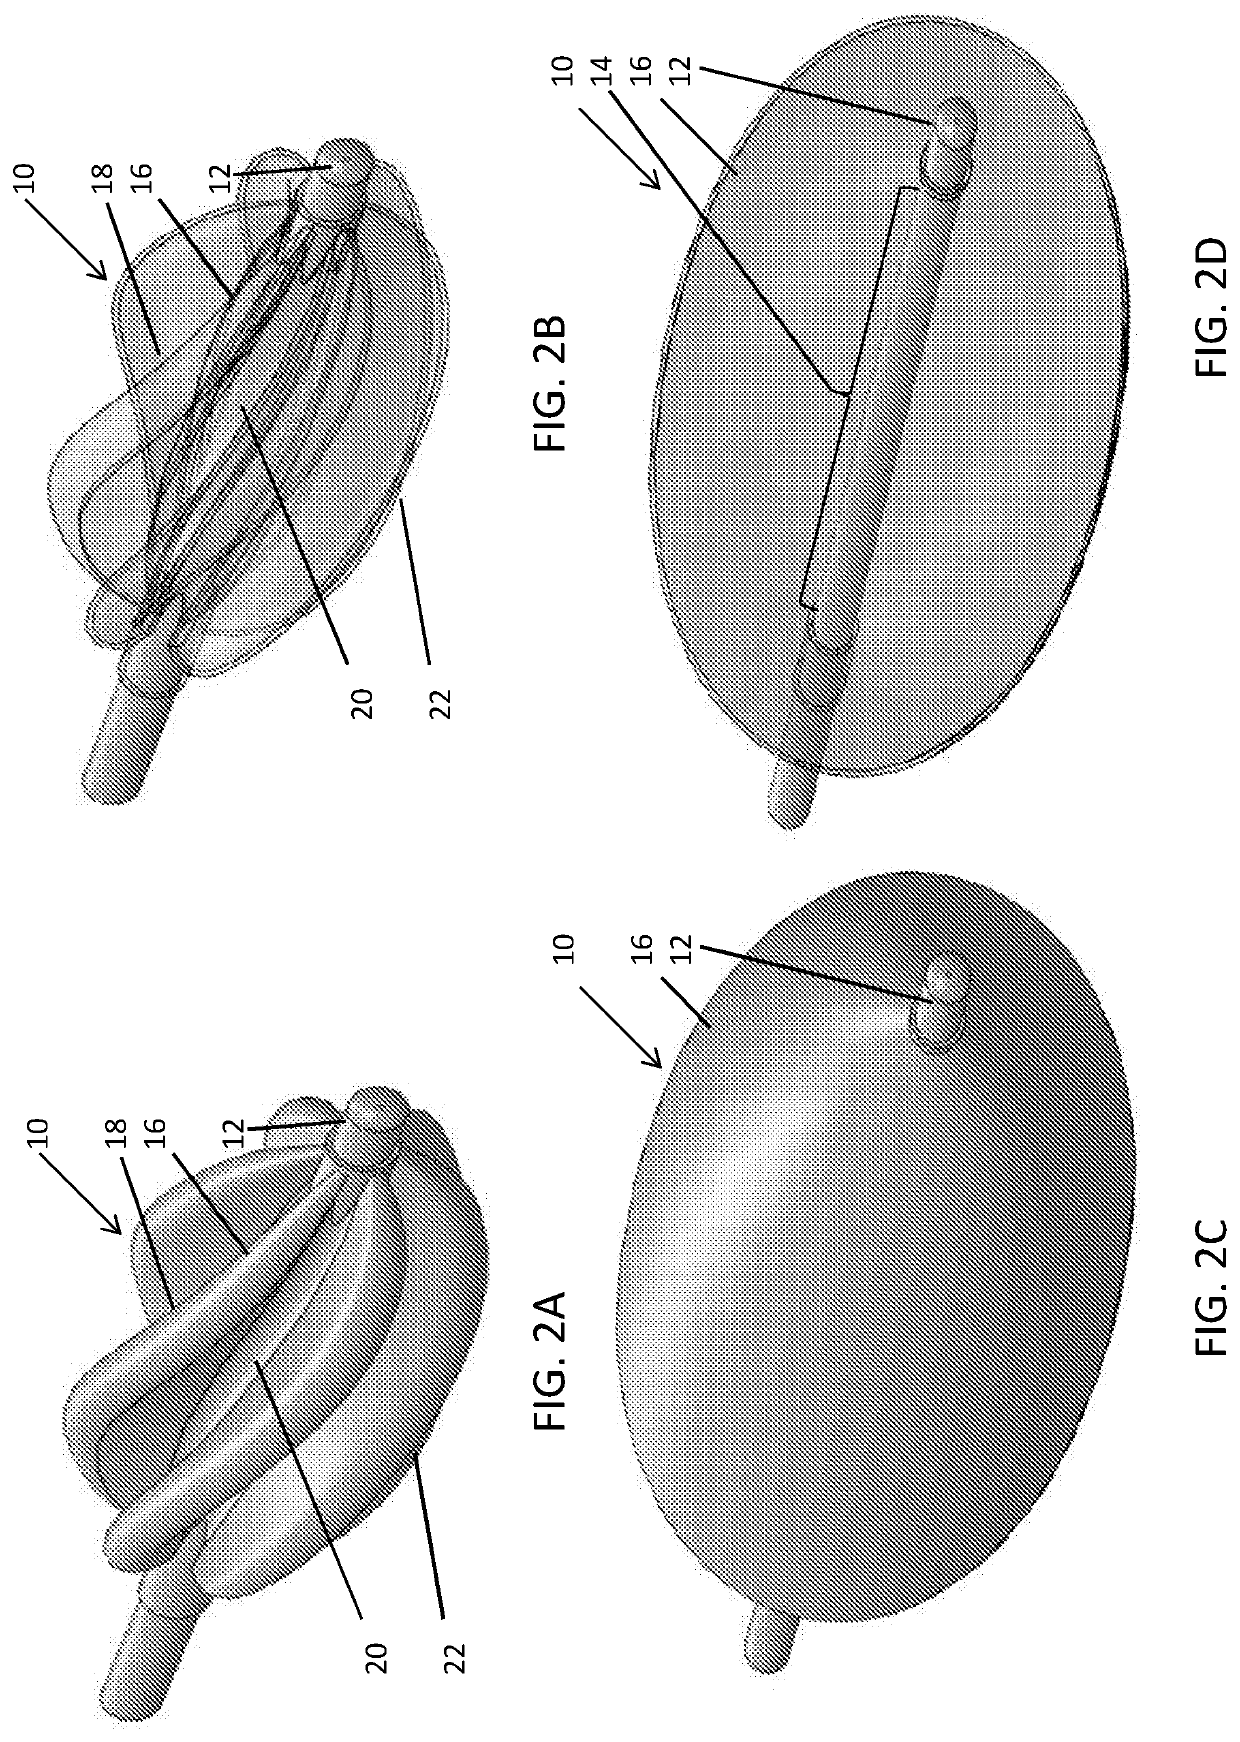 Intra-aortic spiral balloon pump